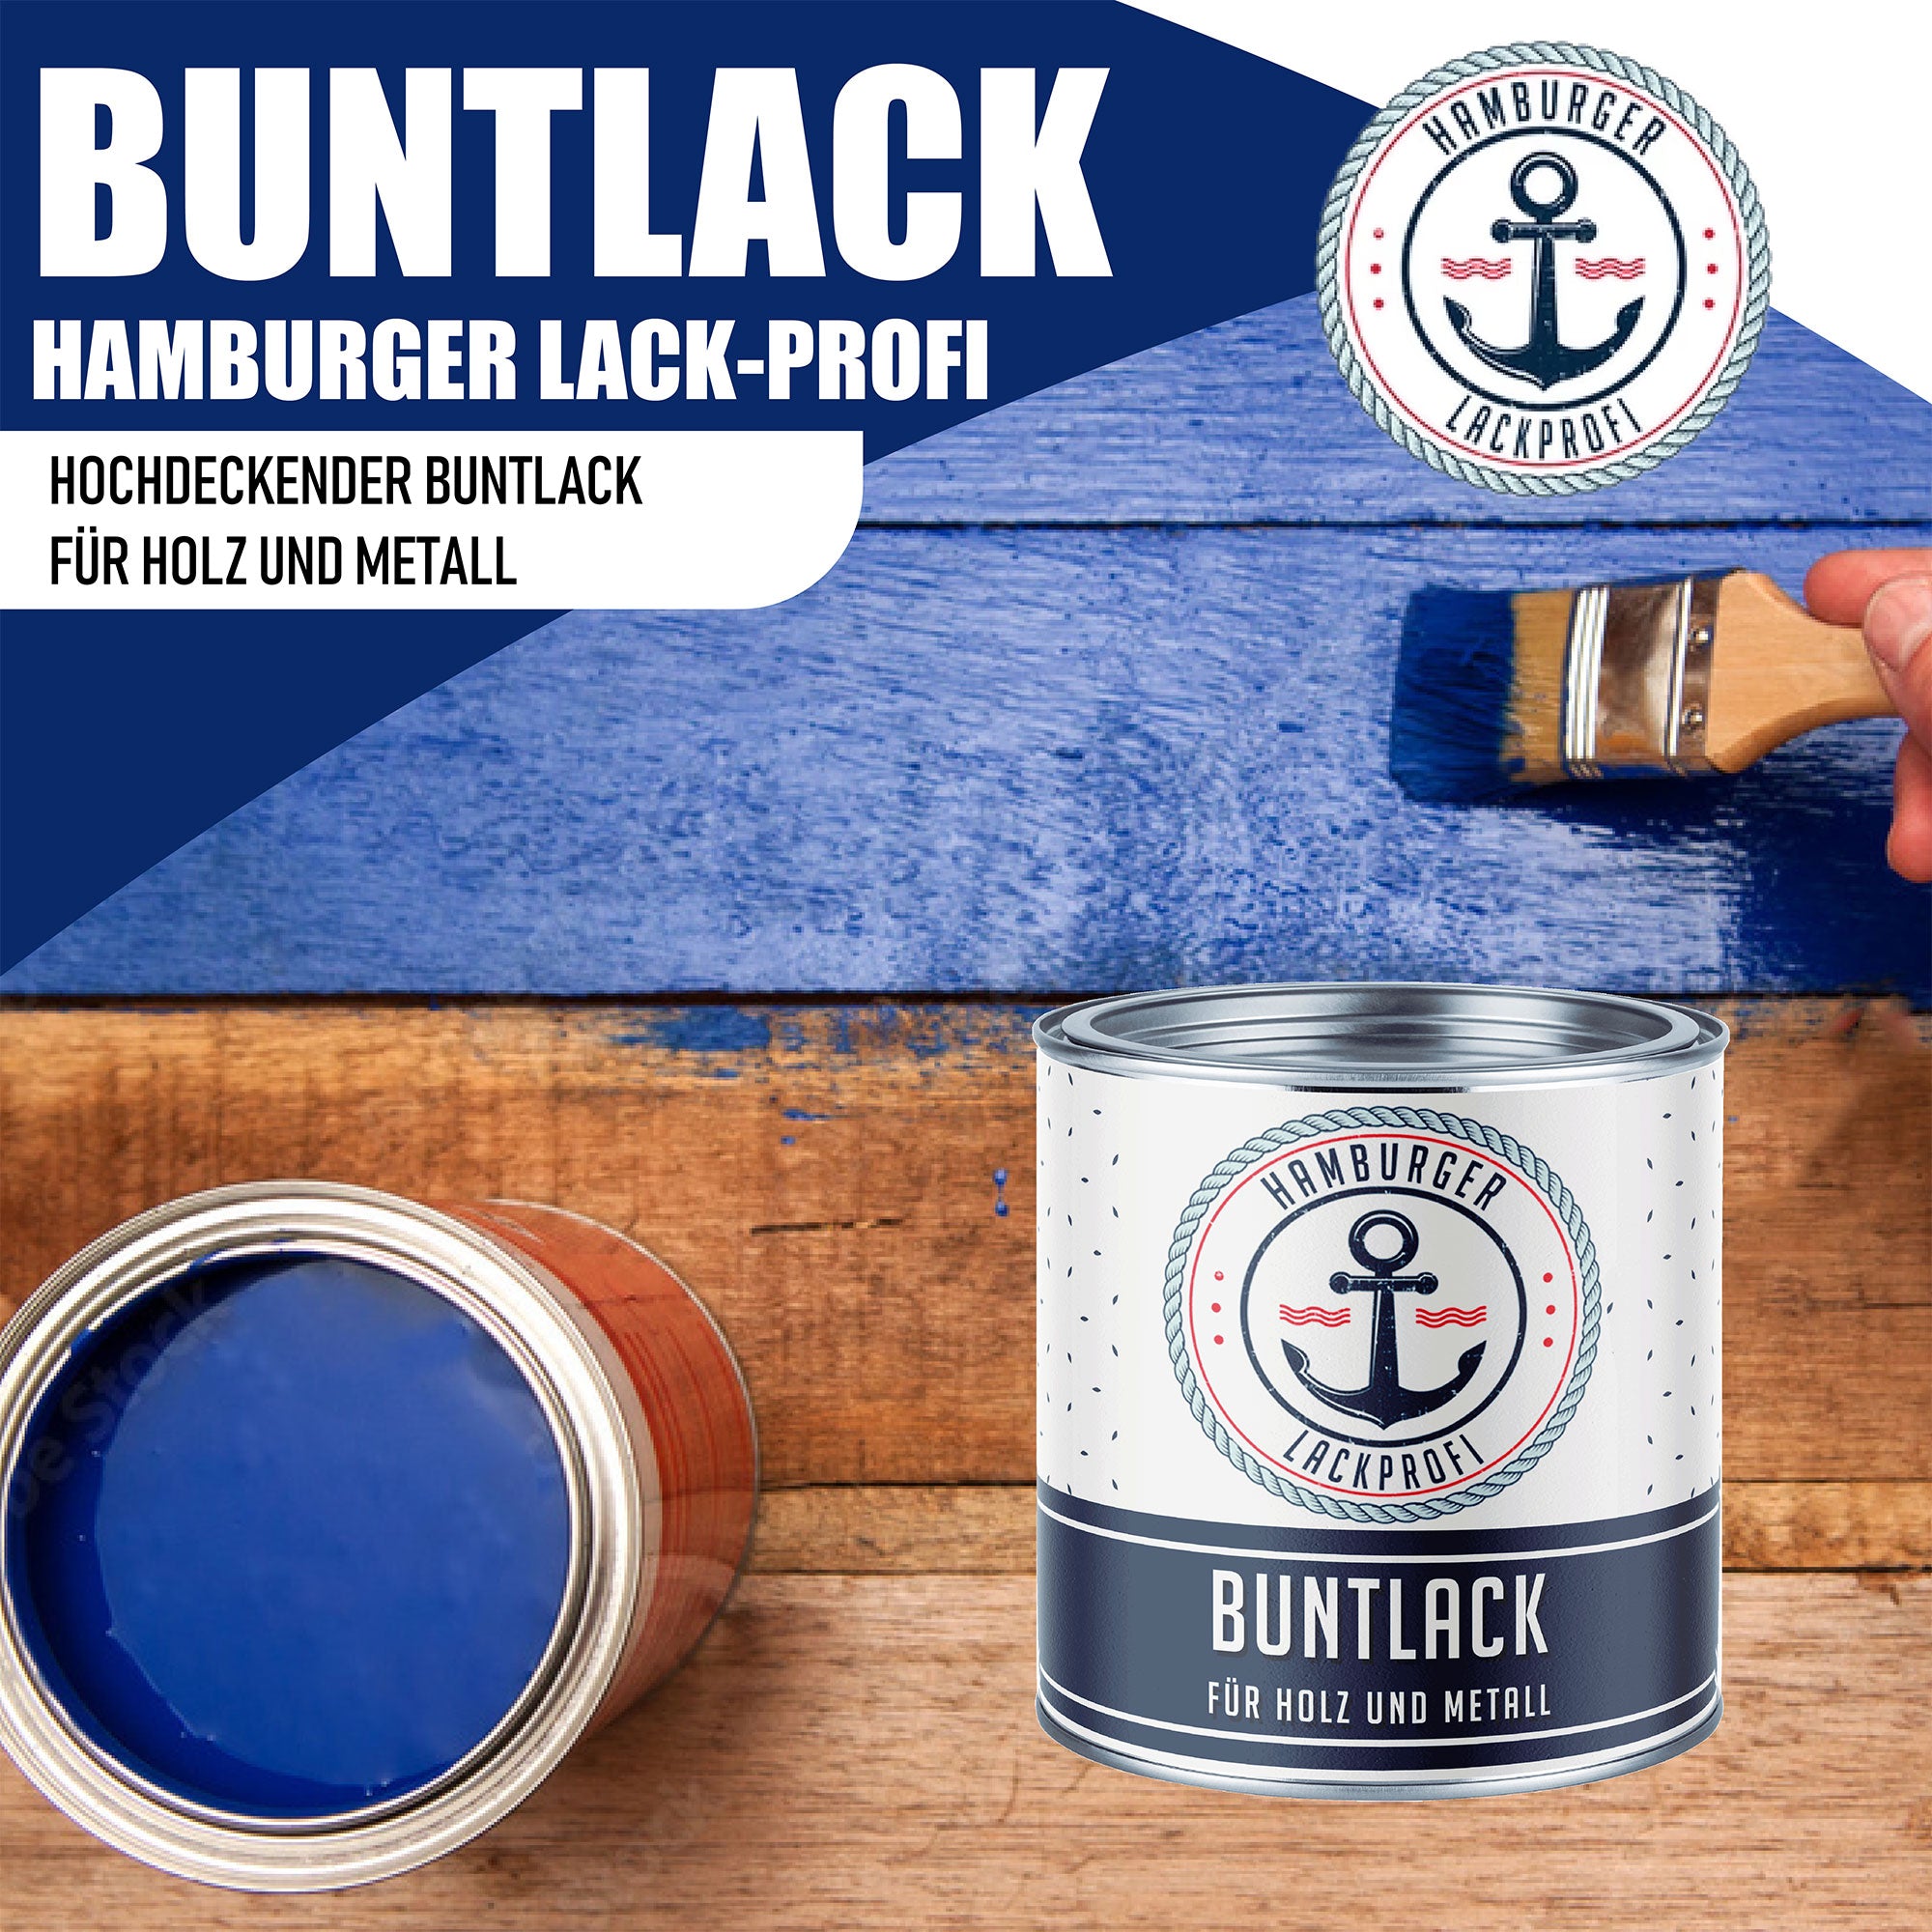 Hamburger Lack-Profi Buntlack in Kupferbraun RAL 8004 mit Lackierset (X300) & Verdünnung (1 L) - 30% Sparangebot